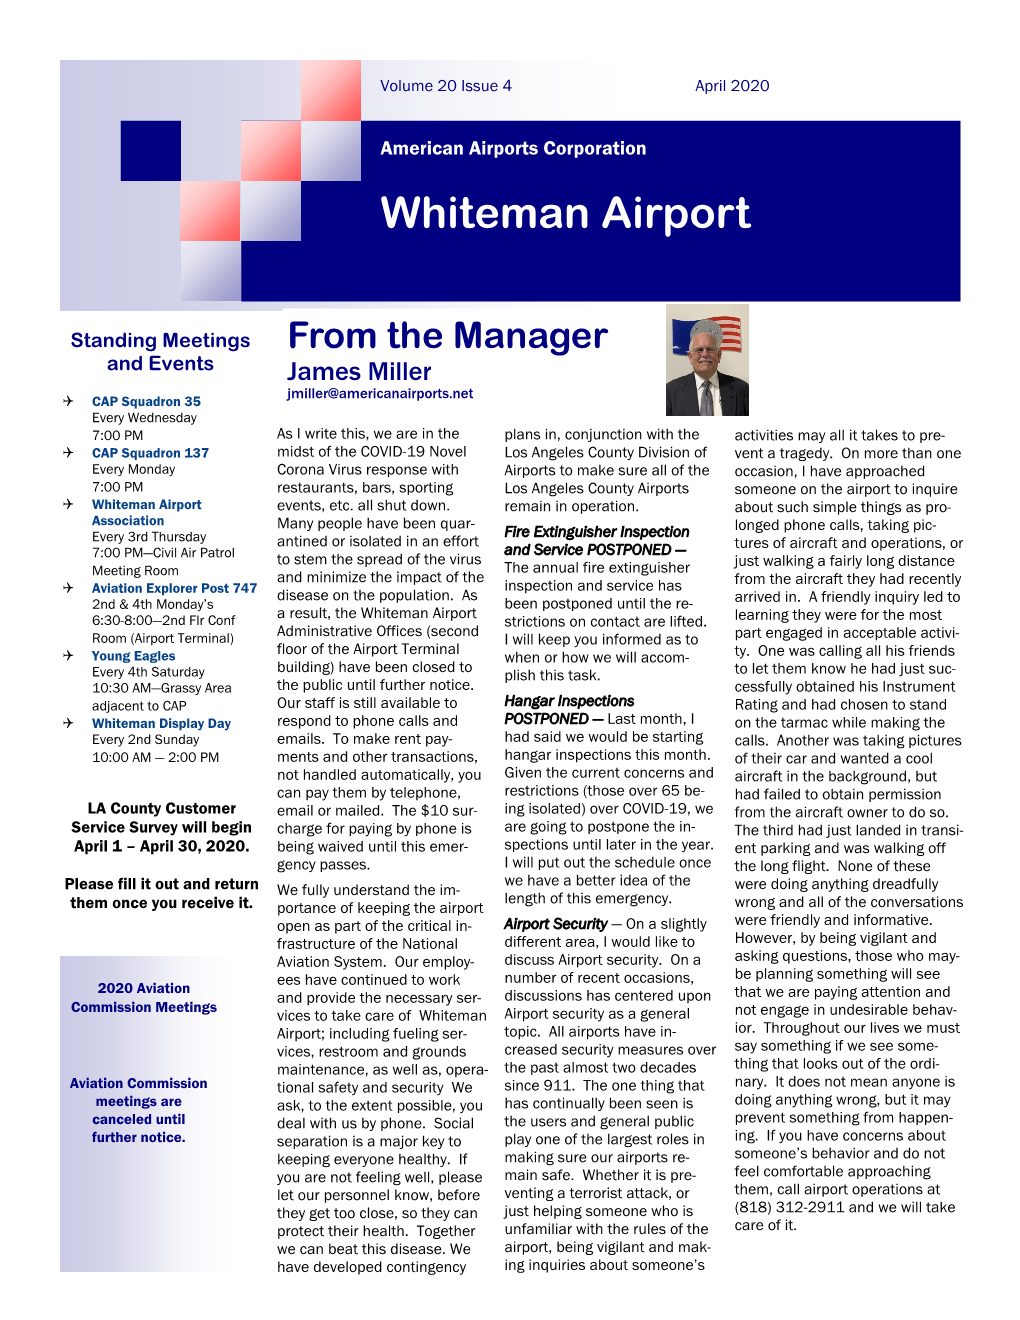 Whiteman Airport April 2020 Newsletter